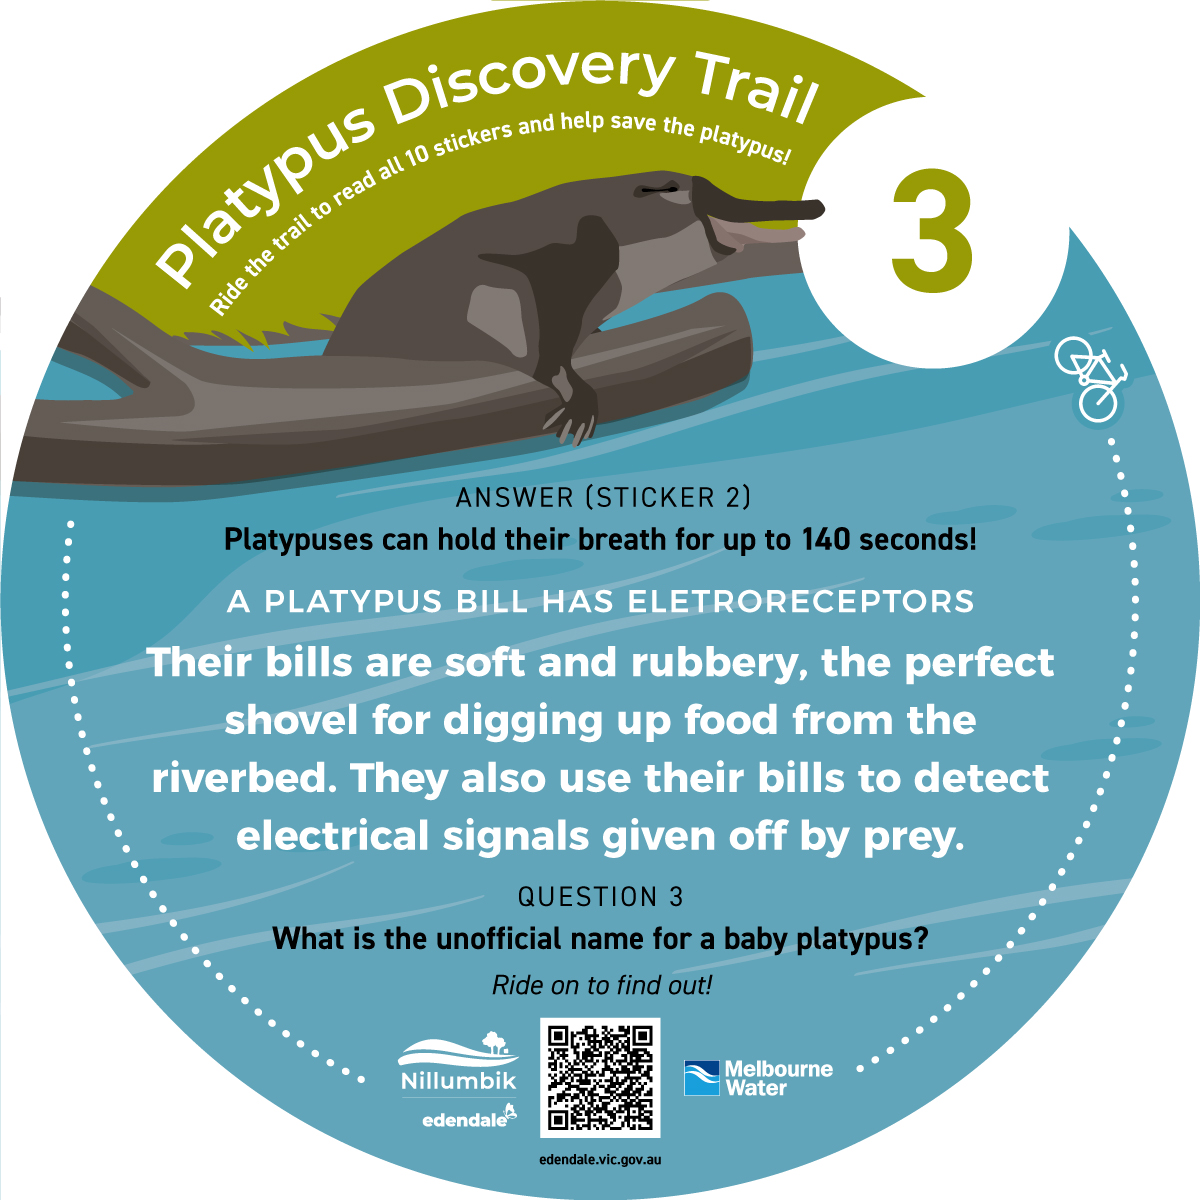 Diamond-Creek-Platypus-Discovery-Trail-3.jpg